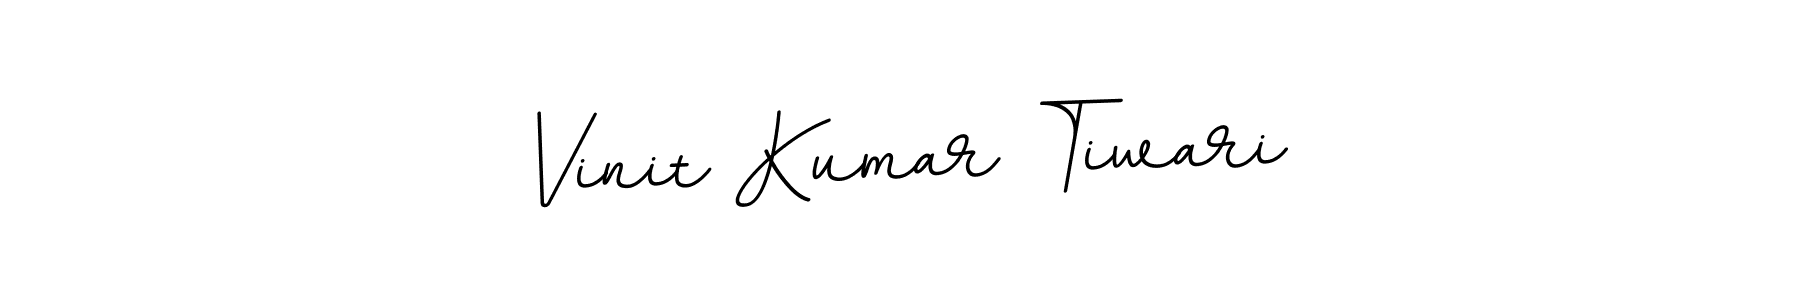 How to Draw Vinit Kumar Tiwari signature style? BallpointsItalic-DORy9 is a latest design signature styles for name Vinit Kumar Tiwari. Vinit Kumar Tiwari signature style 11 images and pictures png